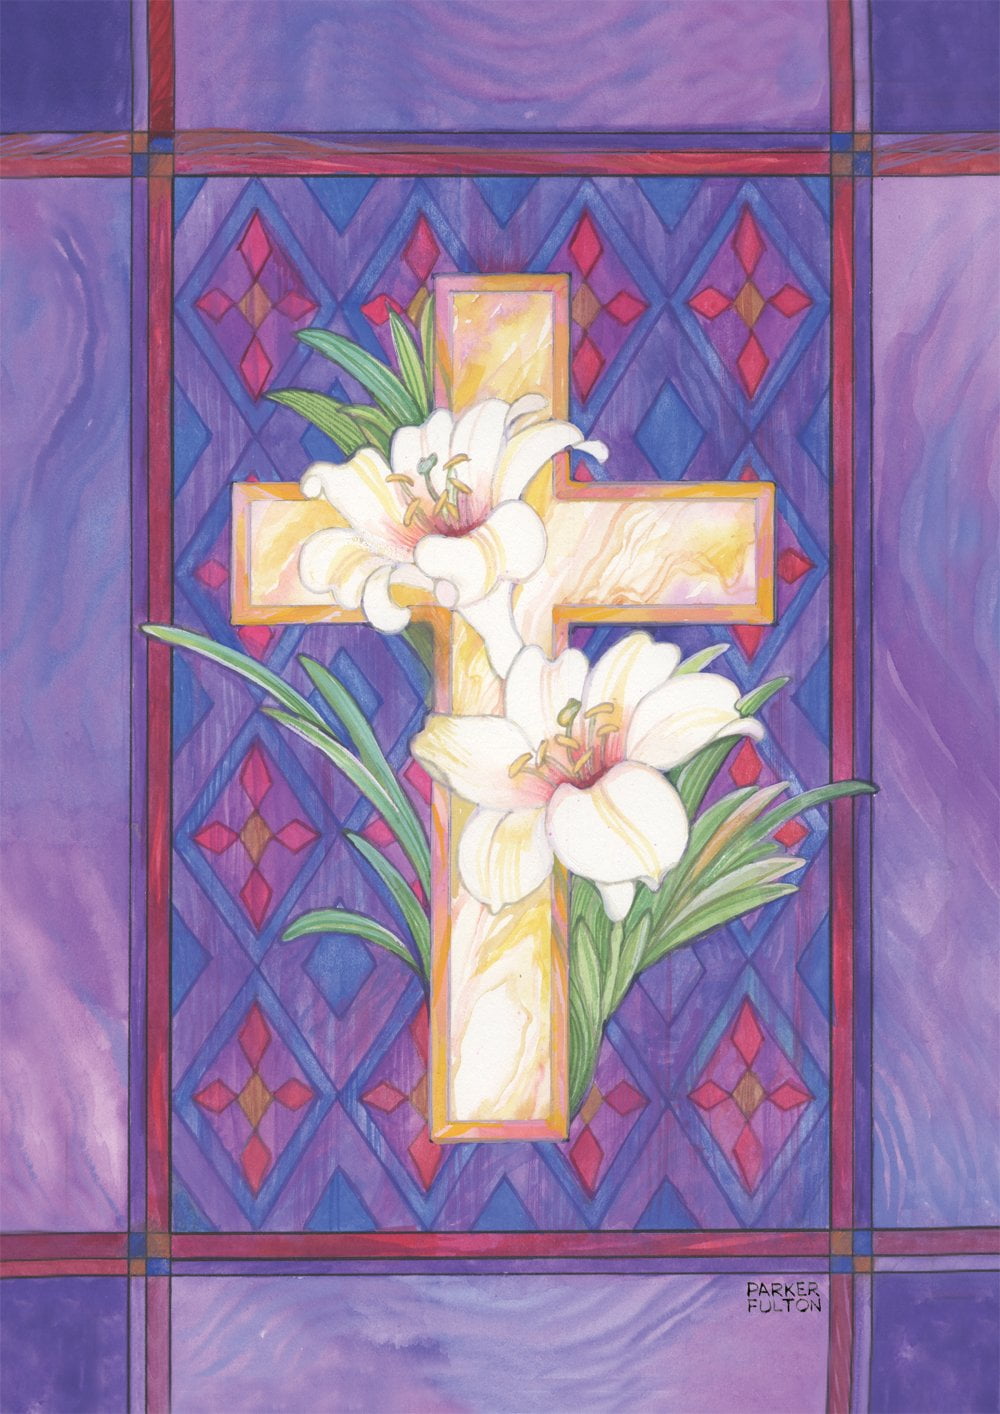 Briarwood Lane Easter Blessings Garden Flag Cross & Lilies Religious 12.5 x 18 